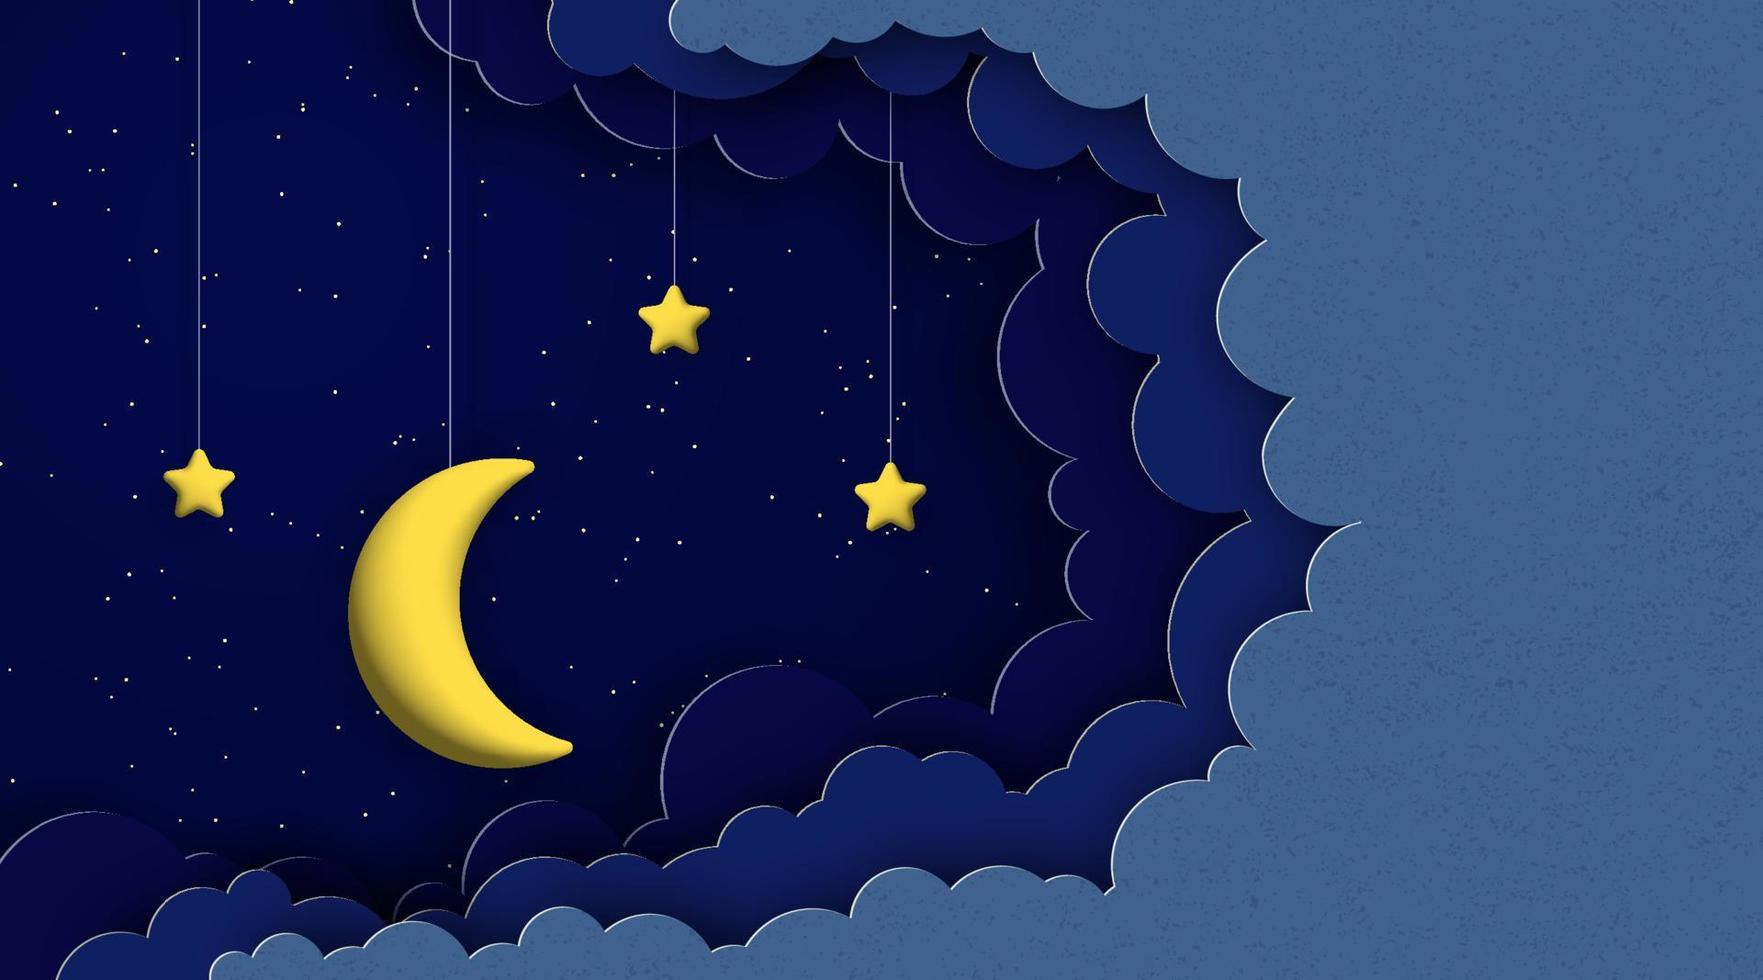 3d maan en sterren Aan wolken en nacht sterrenhemel lucht achtergrond. vector